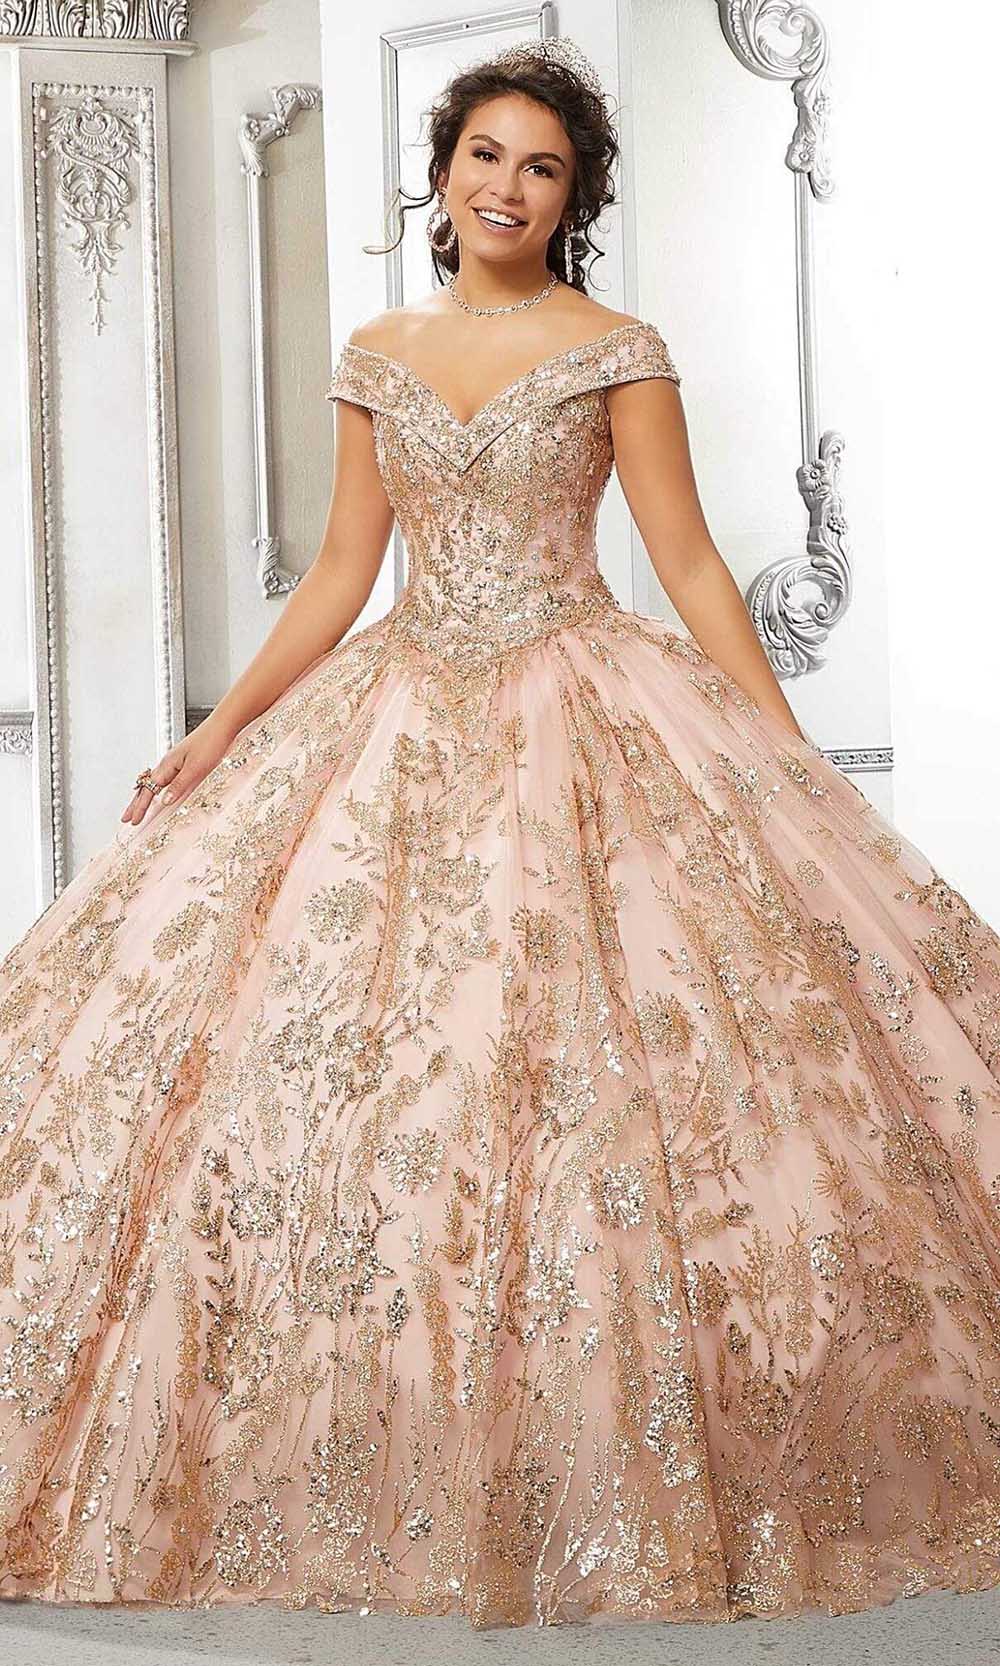 Vizcaya by Mori Lee - 89313 Off Shoulder Glittered Ballgown Quinceanera Dresses 00 / Blush/Rose Gold